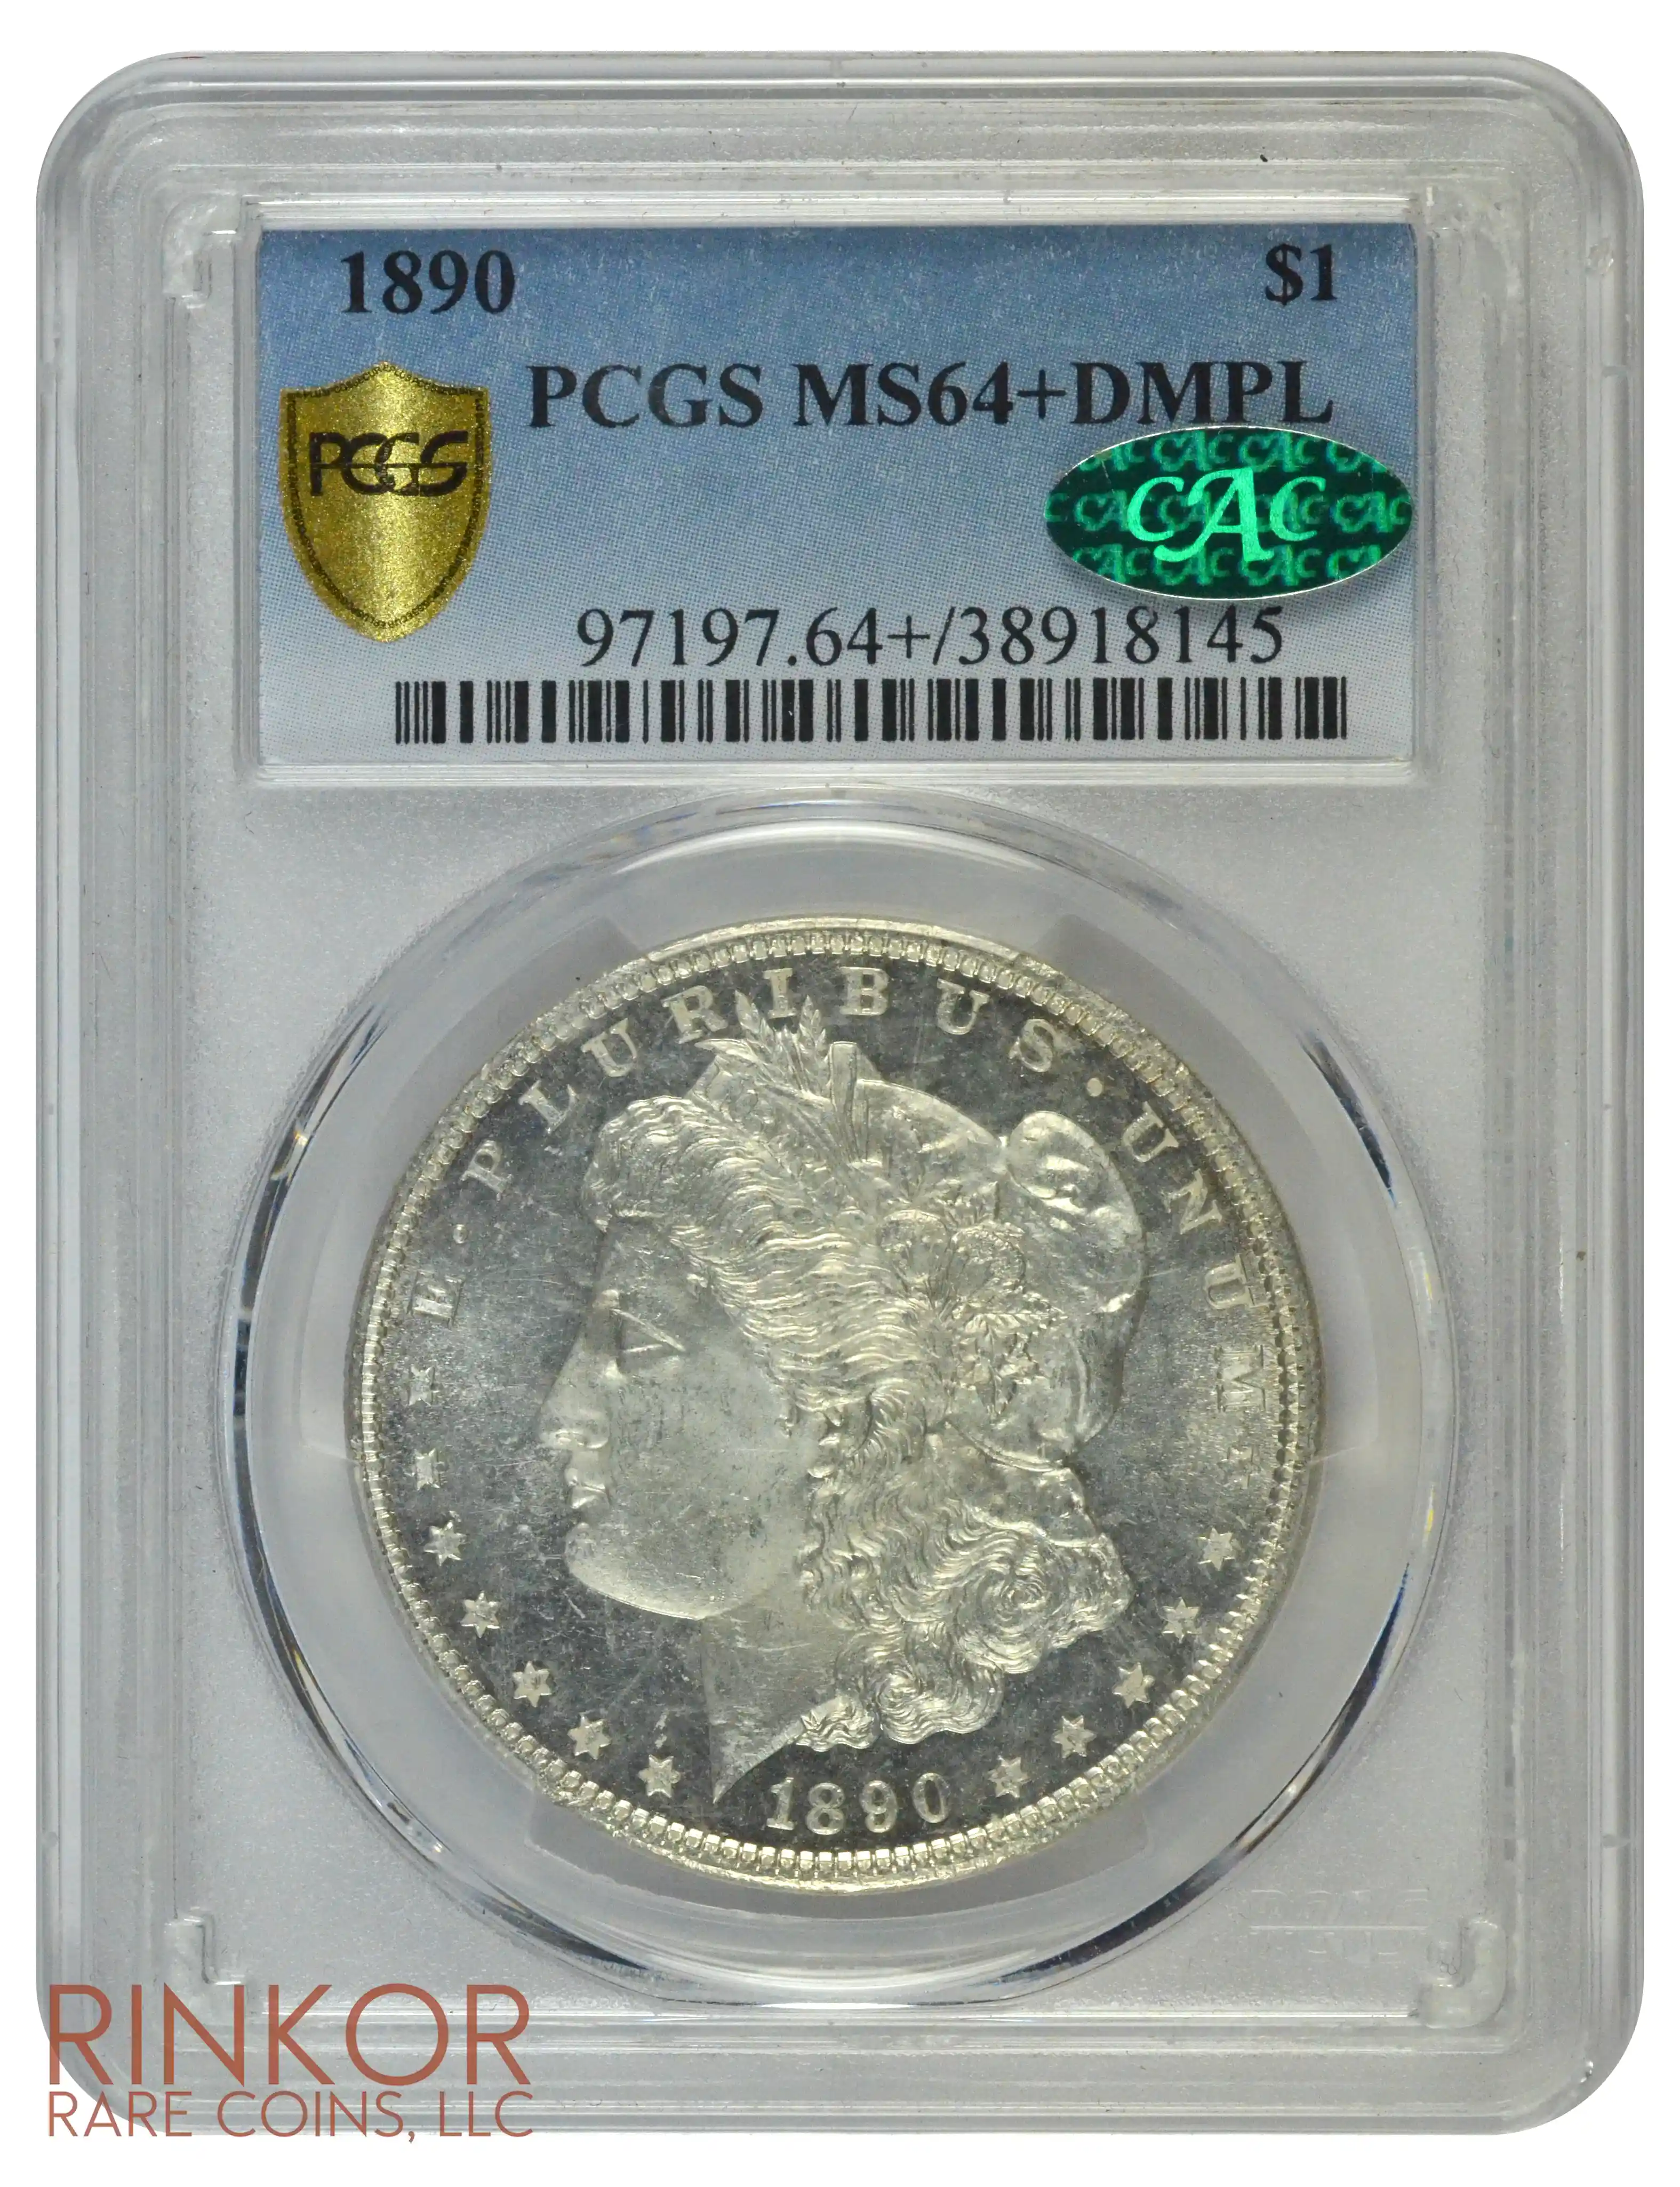 1890 $1 PCGS MS 64+ DMPL CAC